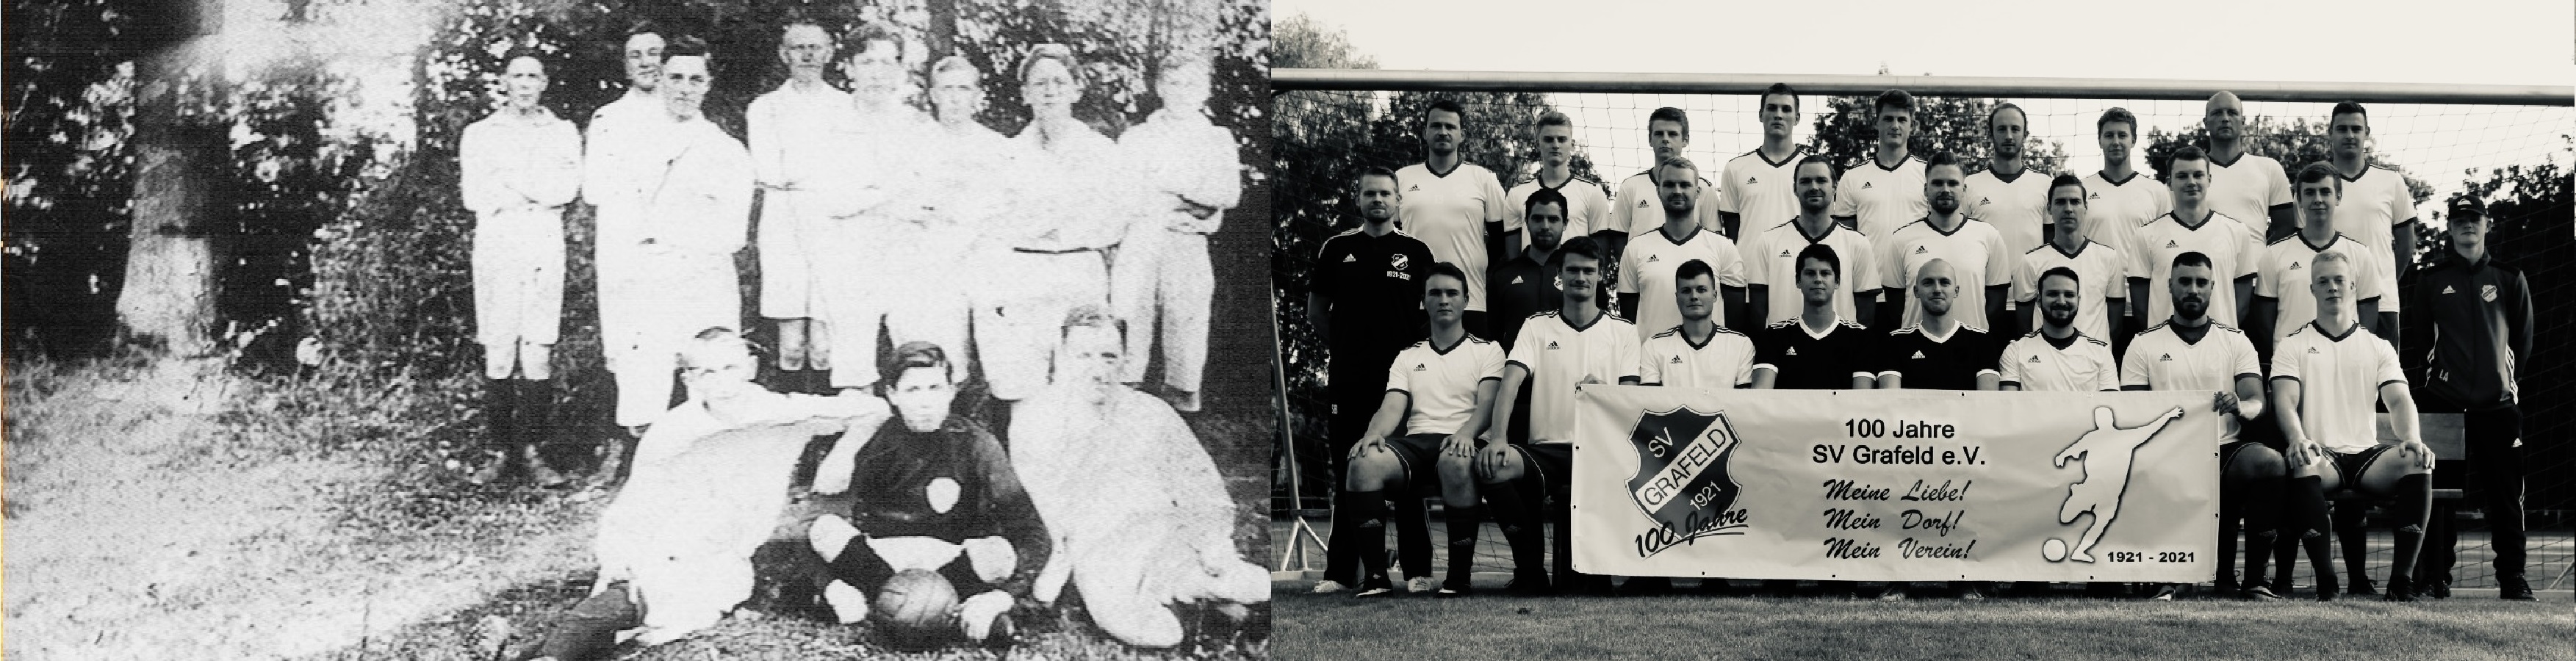 1921 - 2021: 100 Jahre SV Grafeld!